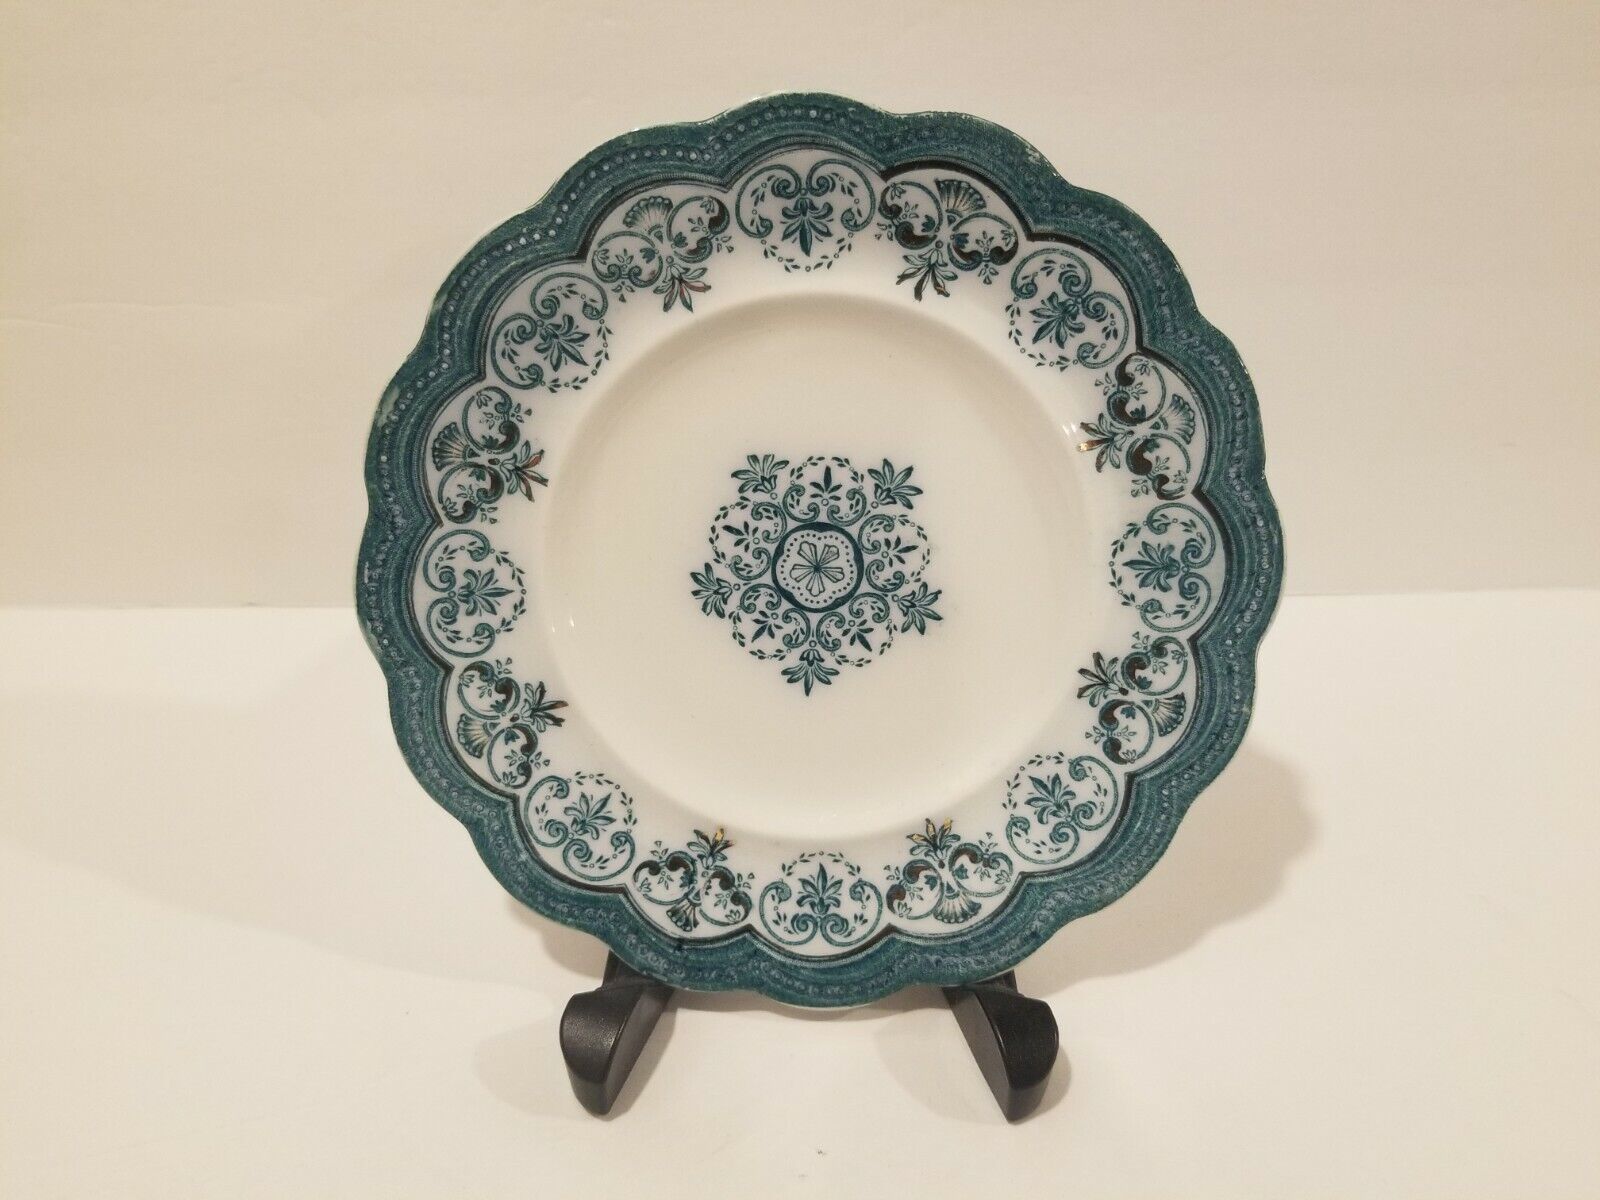 Primary image for Johnson Bros - Regent - Dinner Plate 10 inch - Vintage Rare Aqua